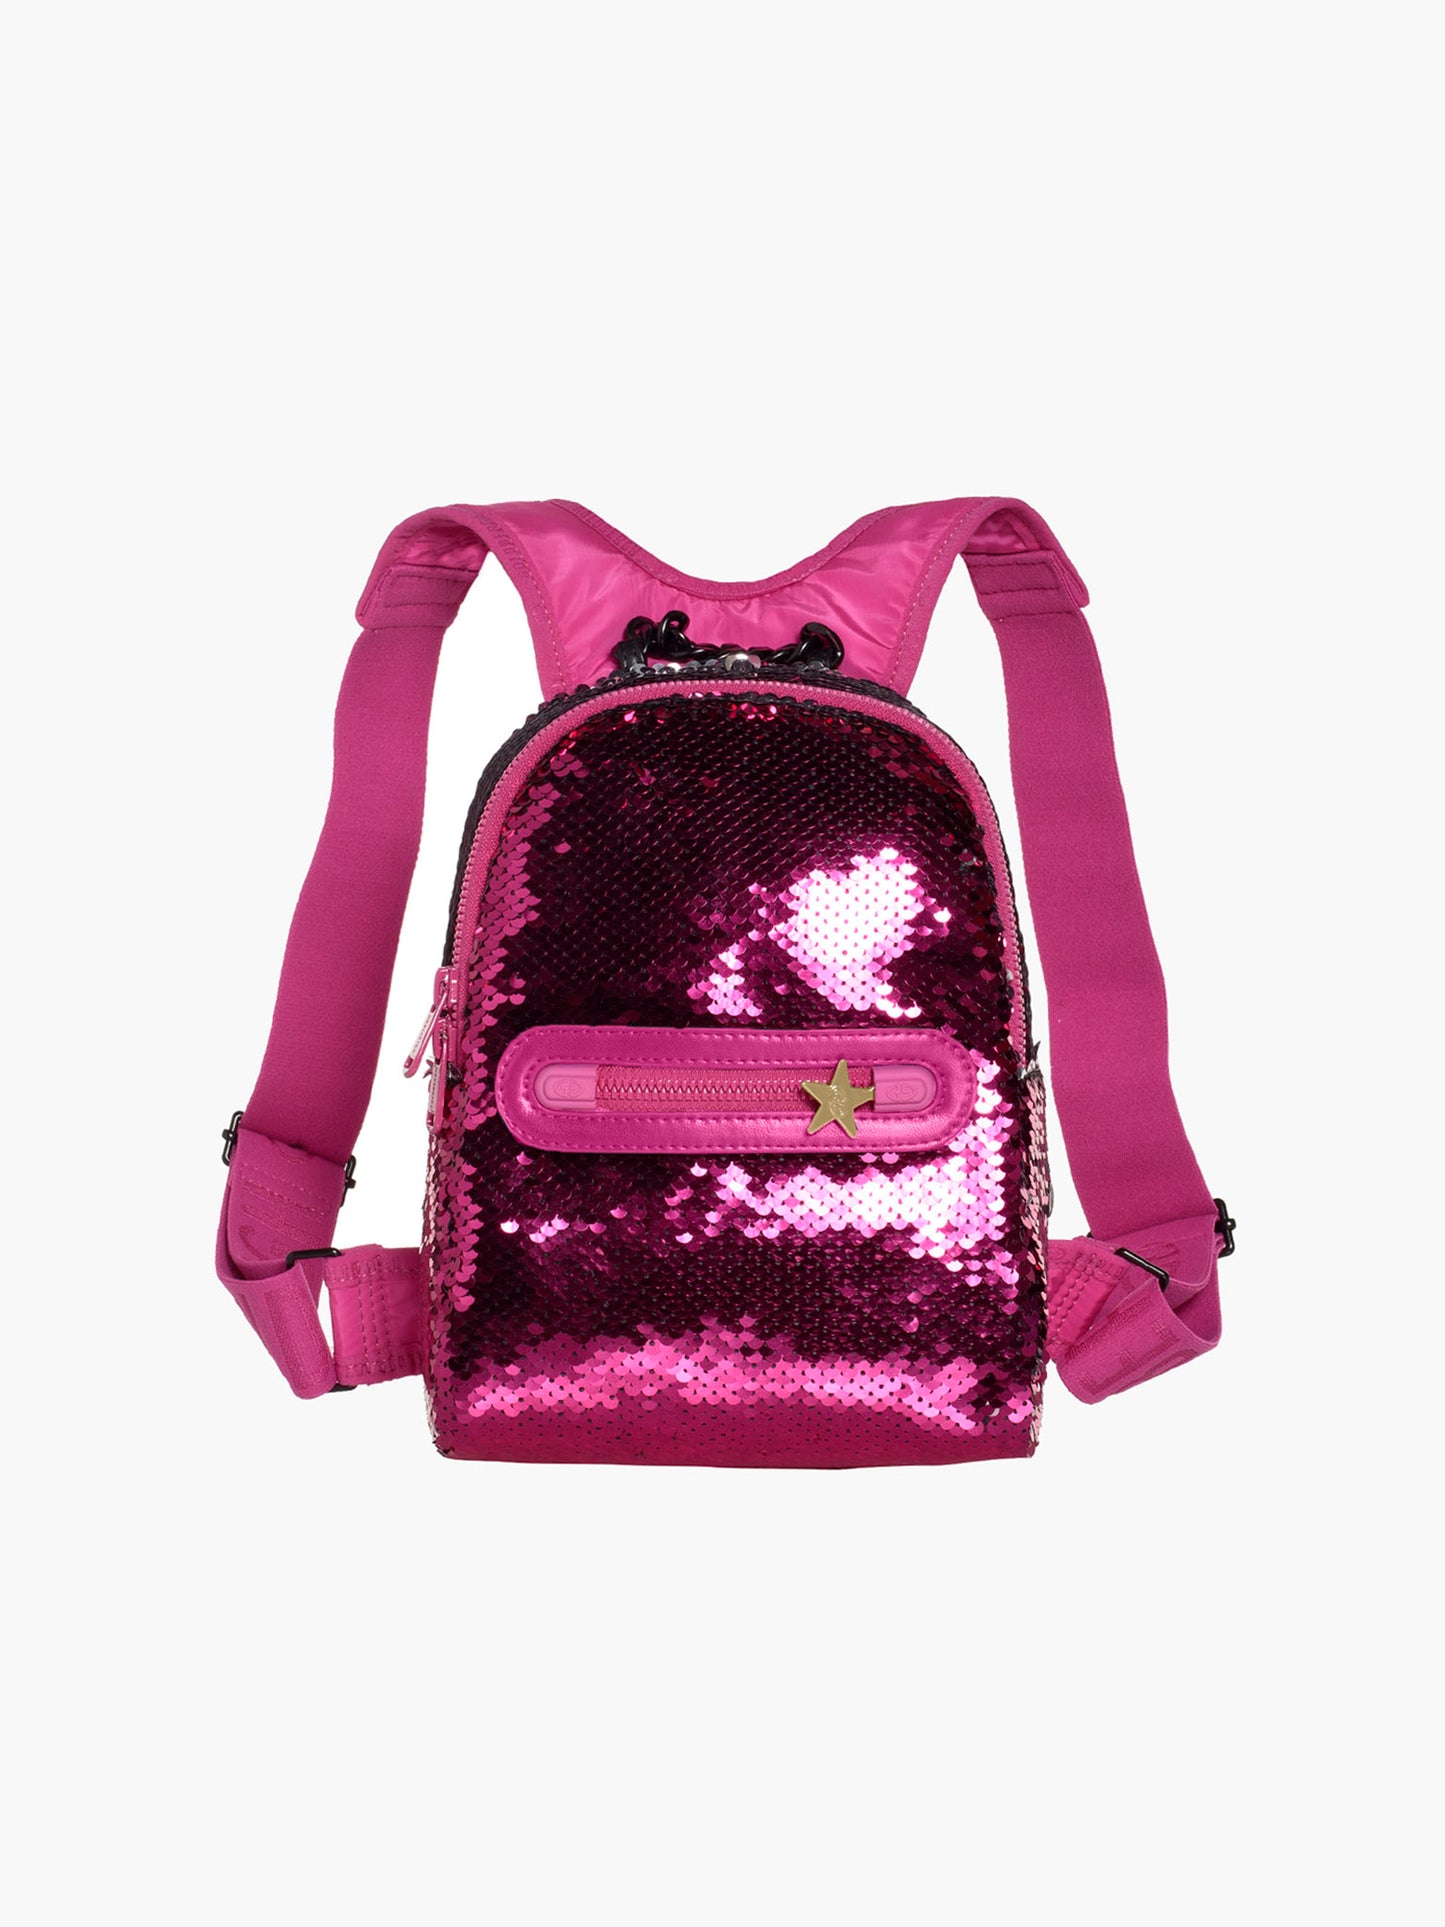 LOVER backpack